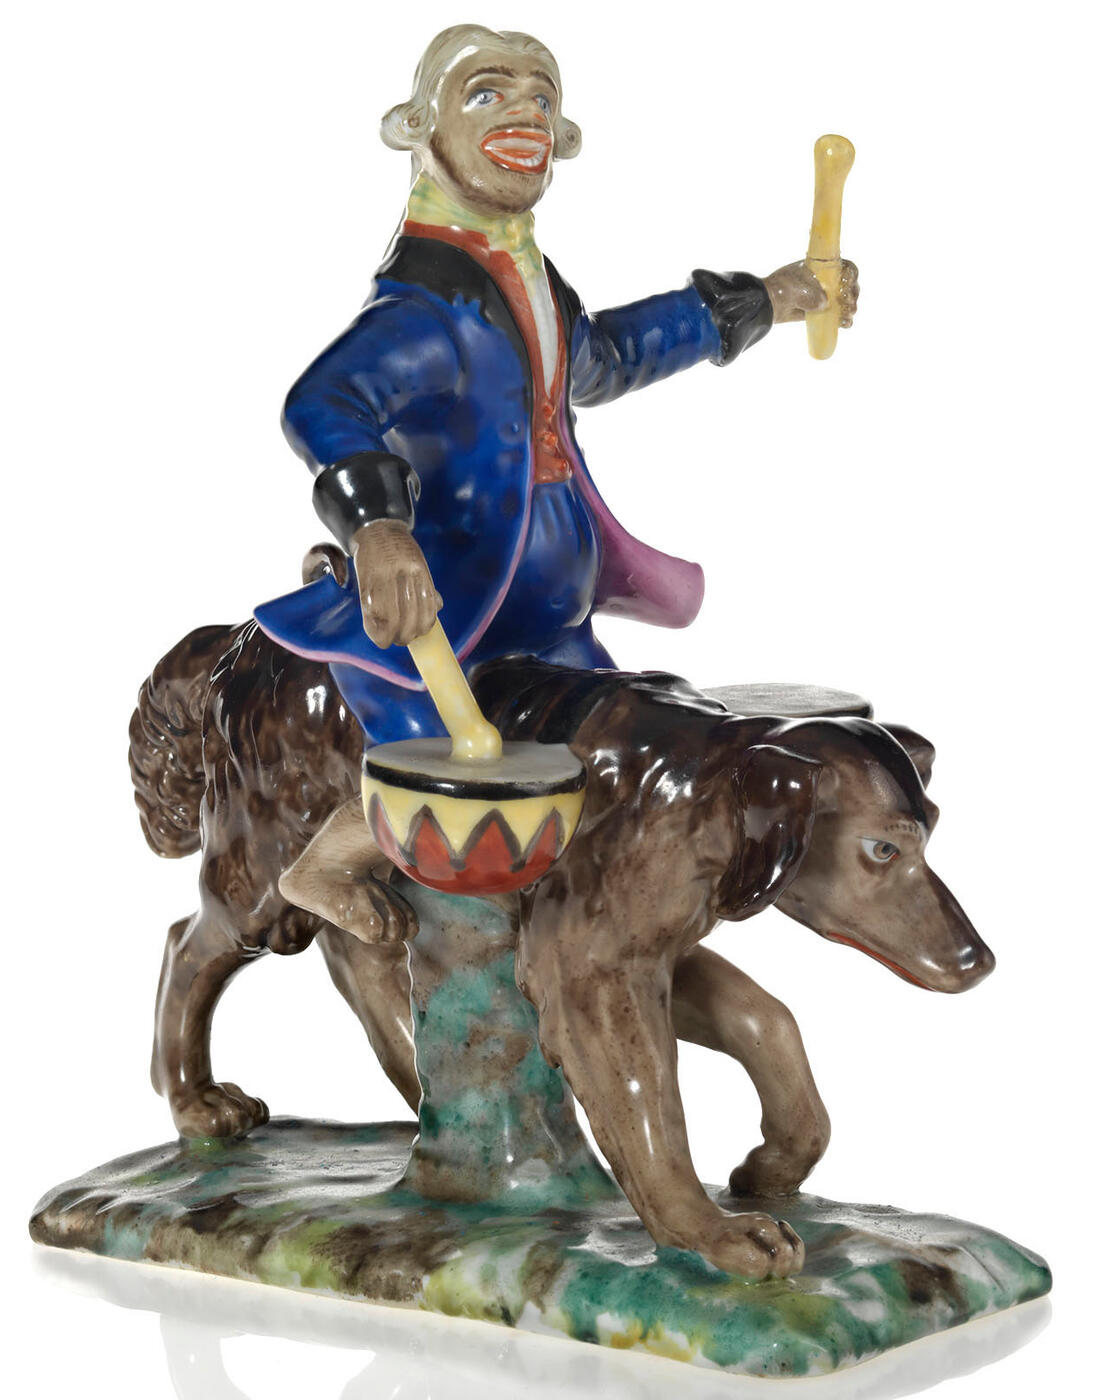 A Porcelain Composition "Monkey Riding the Dog"